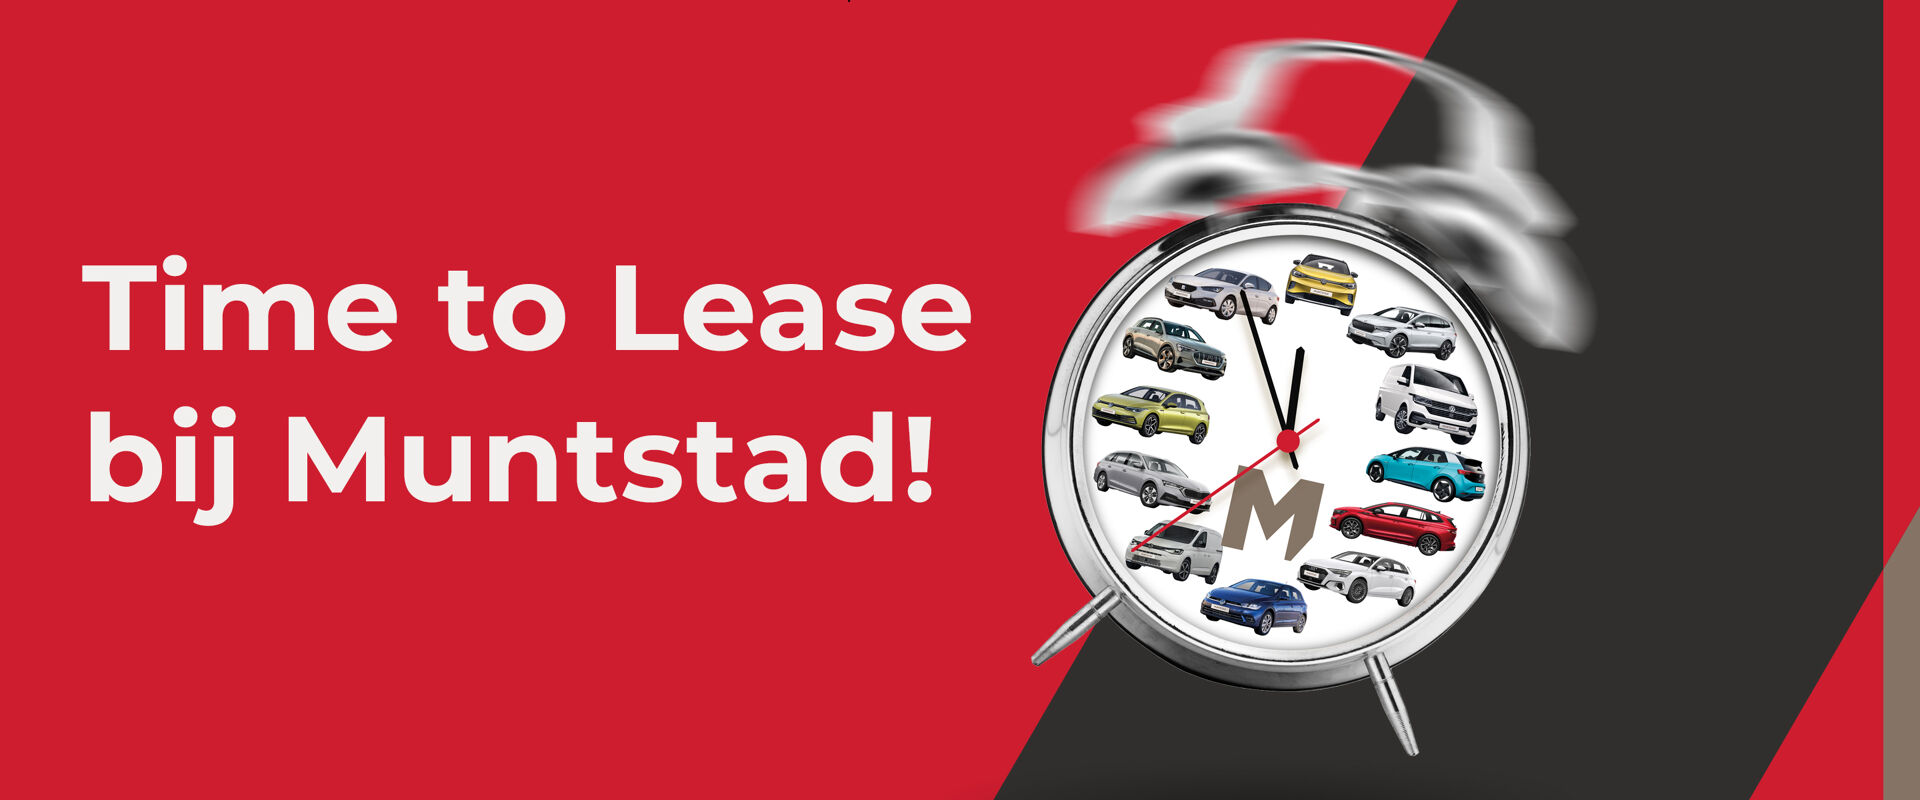 Muntstad-Time-to-lease-slider